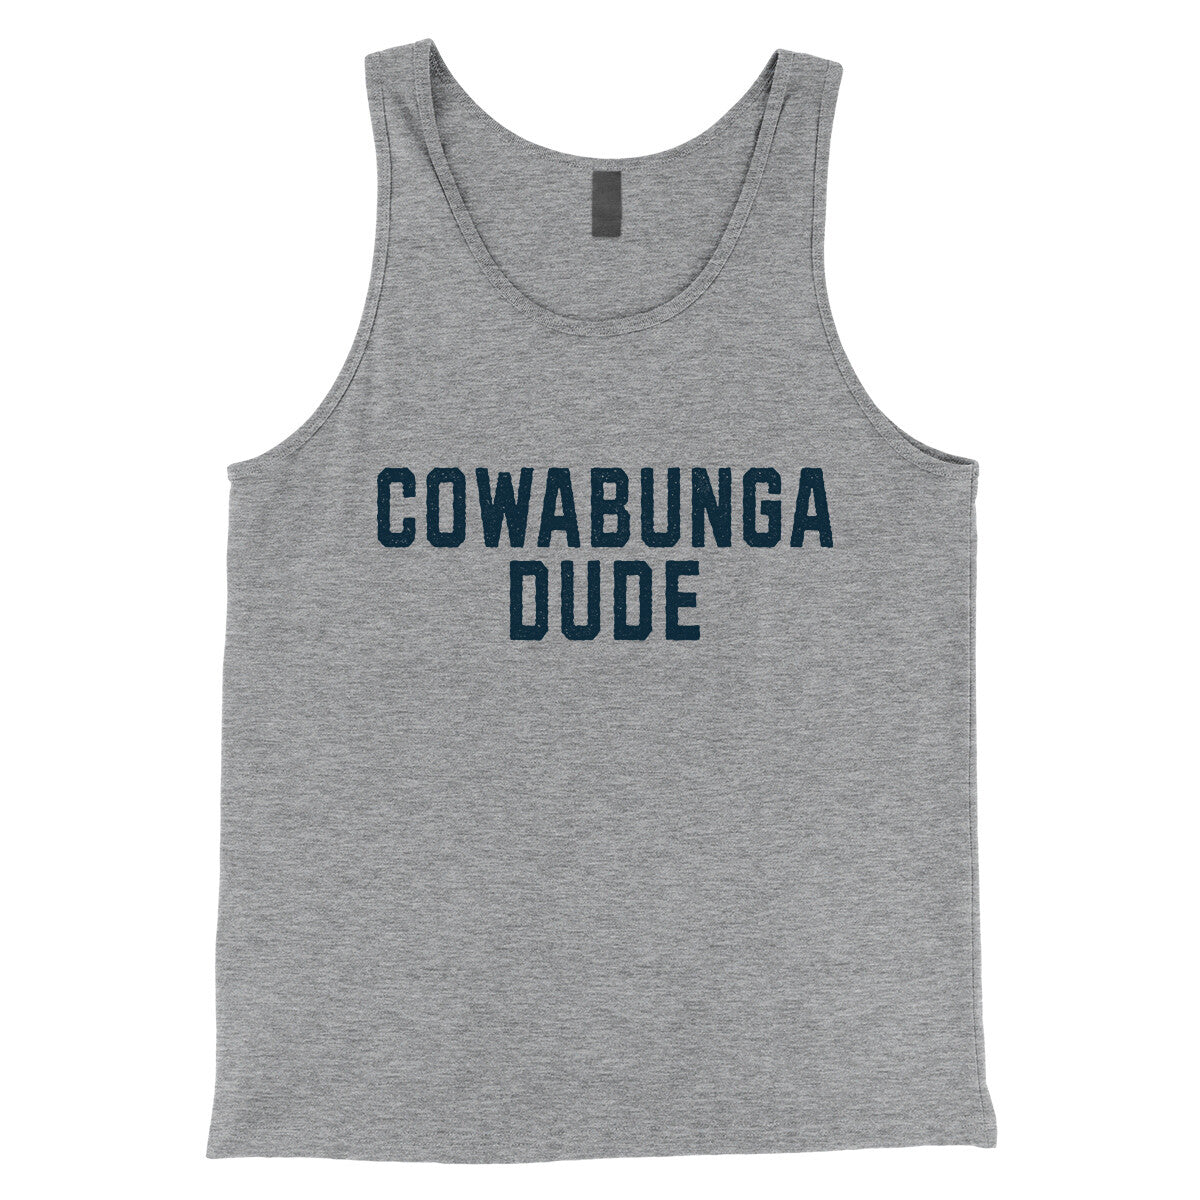 Cowabunga Dude in Athletic Heather Color